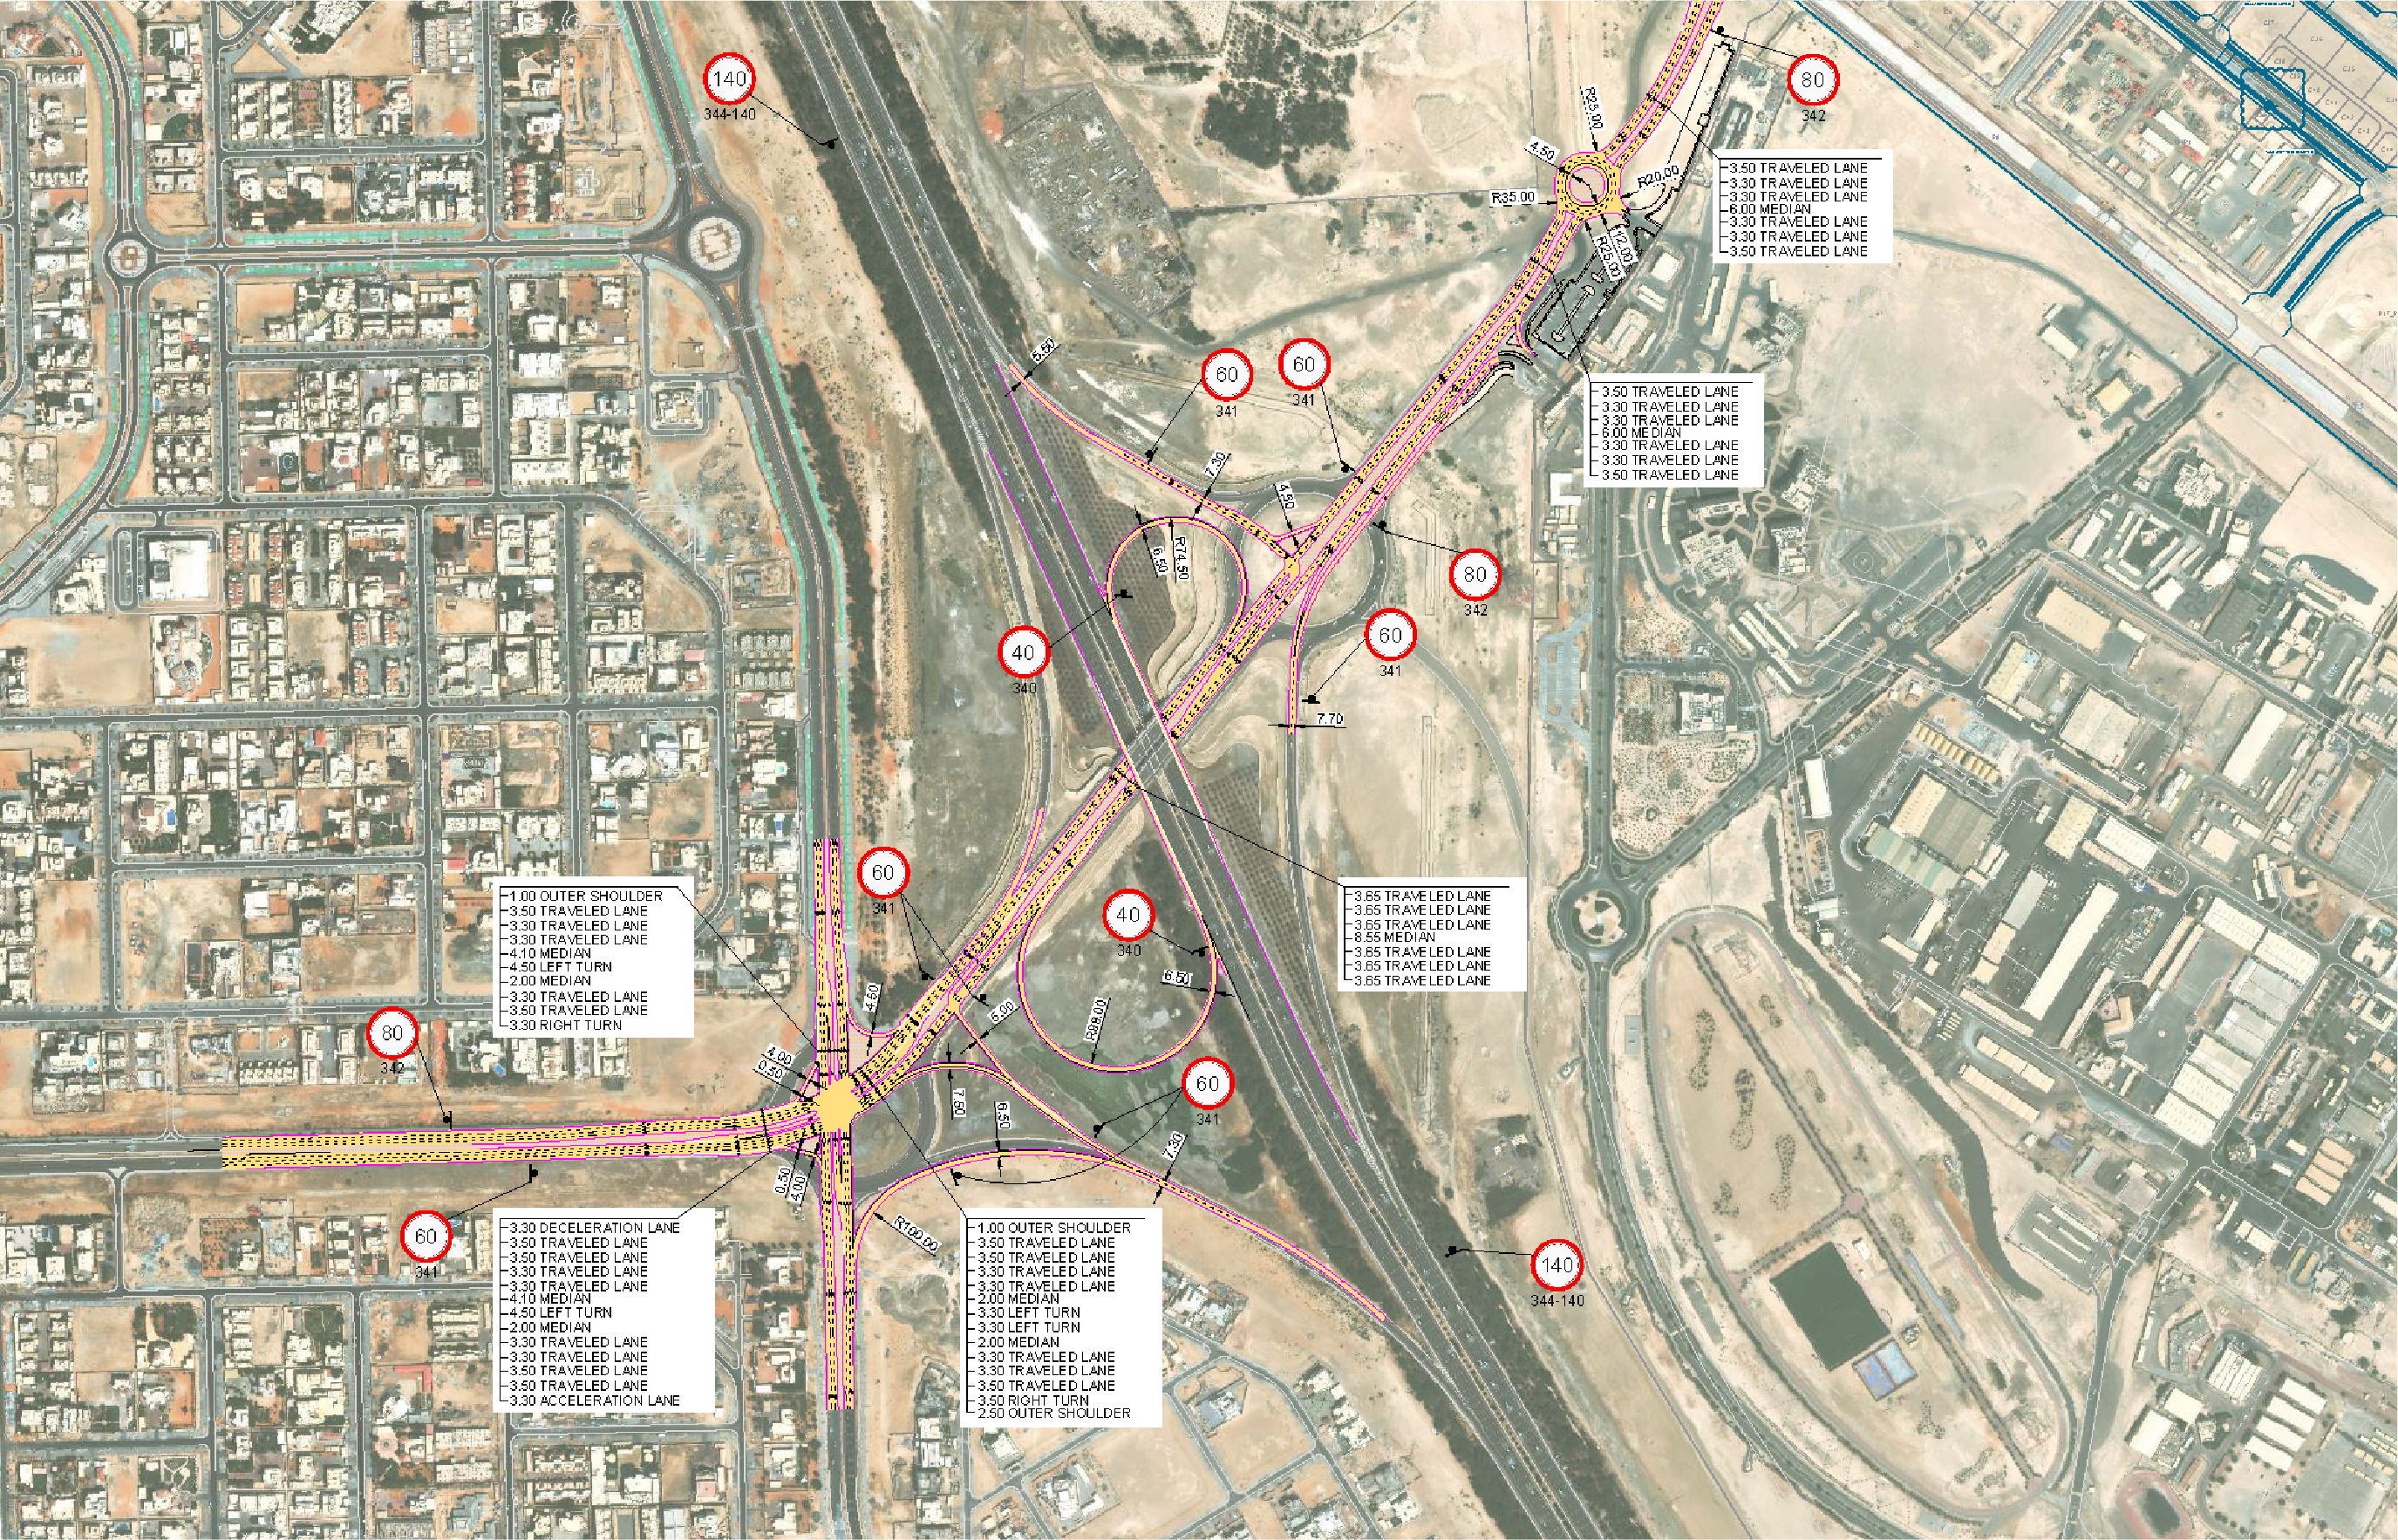 Mahawi Interchange Improvements on Abu Dhabi-Al Ain Road